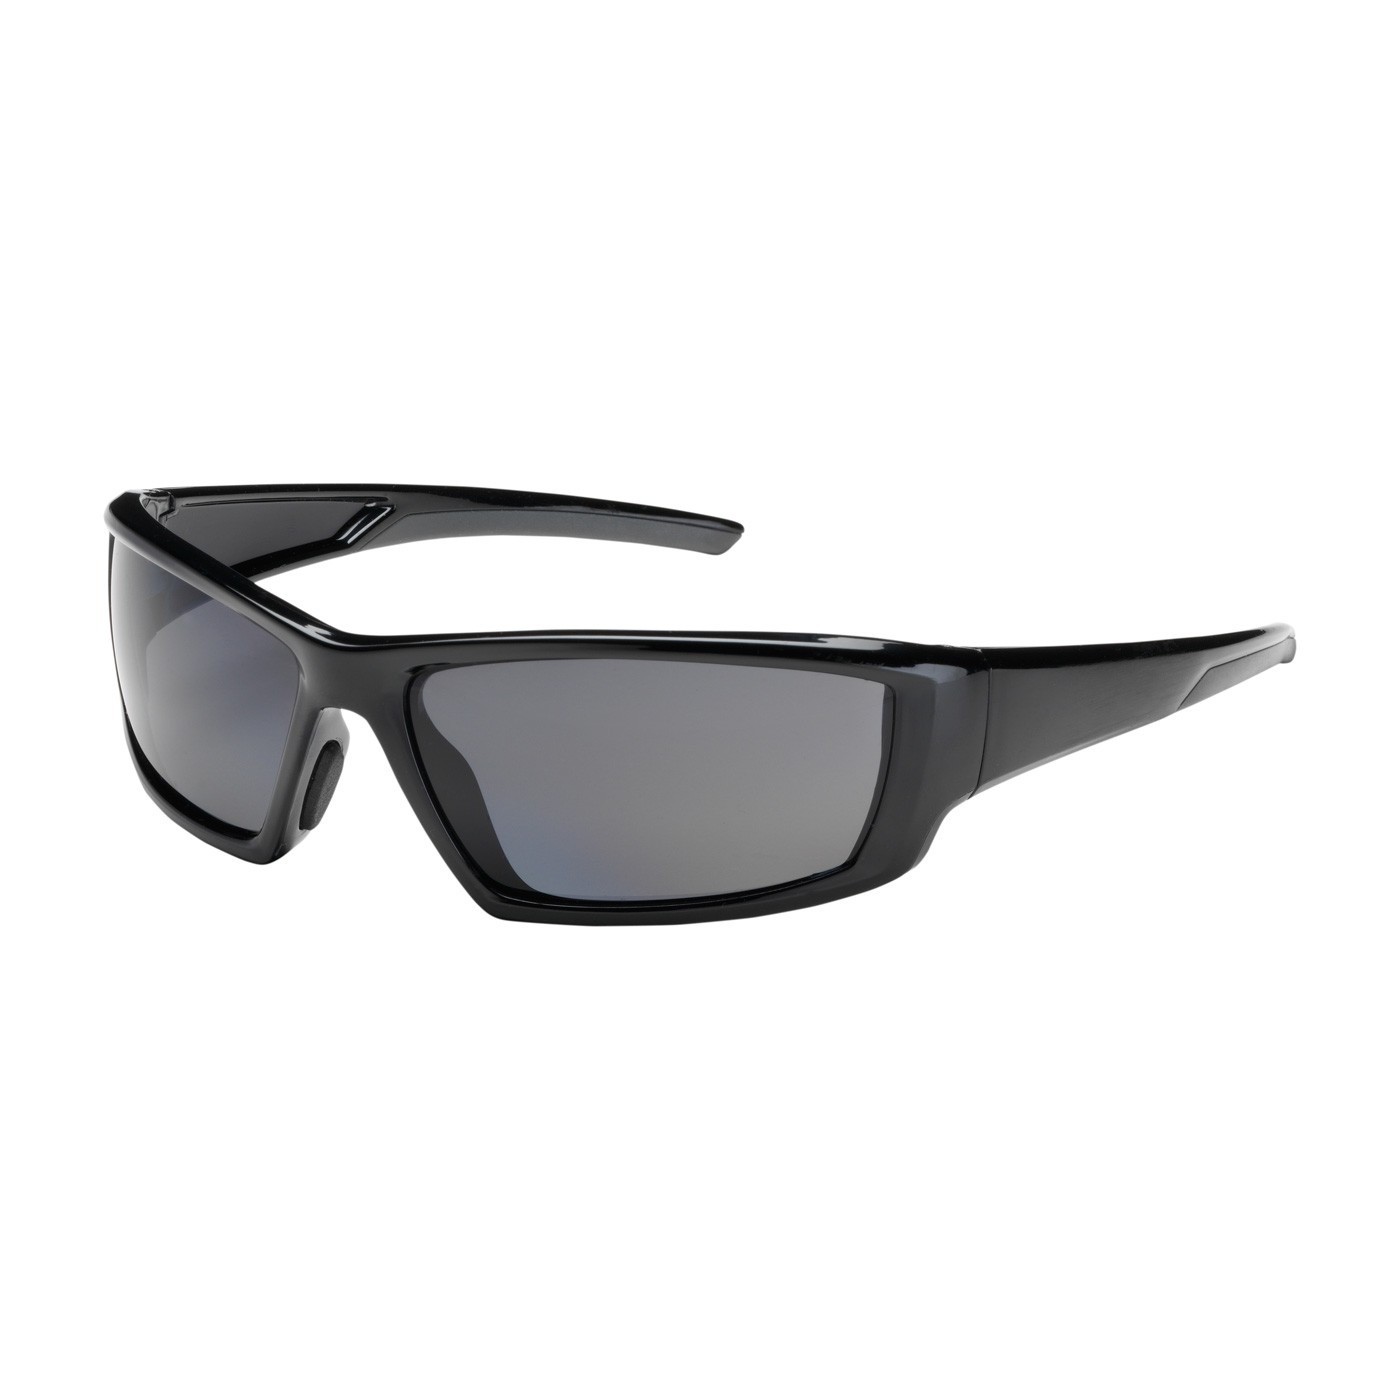 Sunburst™ Full Frame Safety Glasses with Black Frame, Polarized Gray Lens and Anti-Scratch / Anti-Fog Coating  (#250-47-0041)